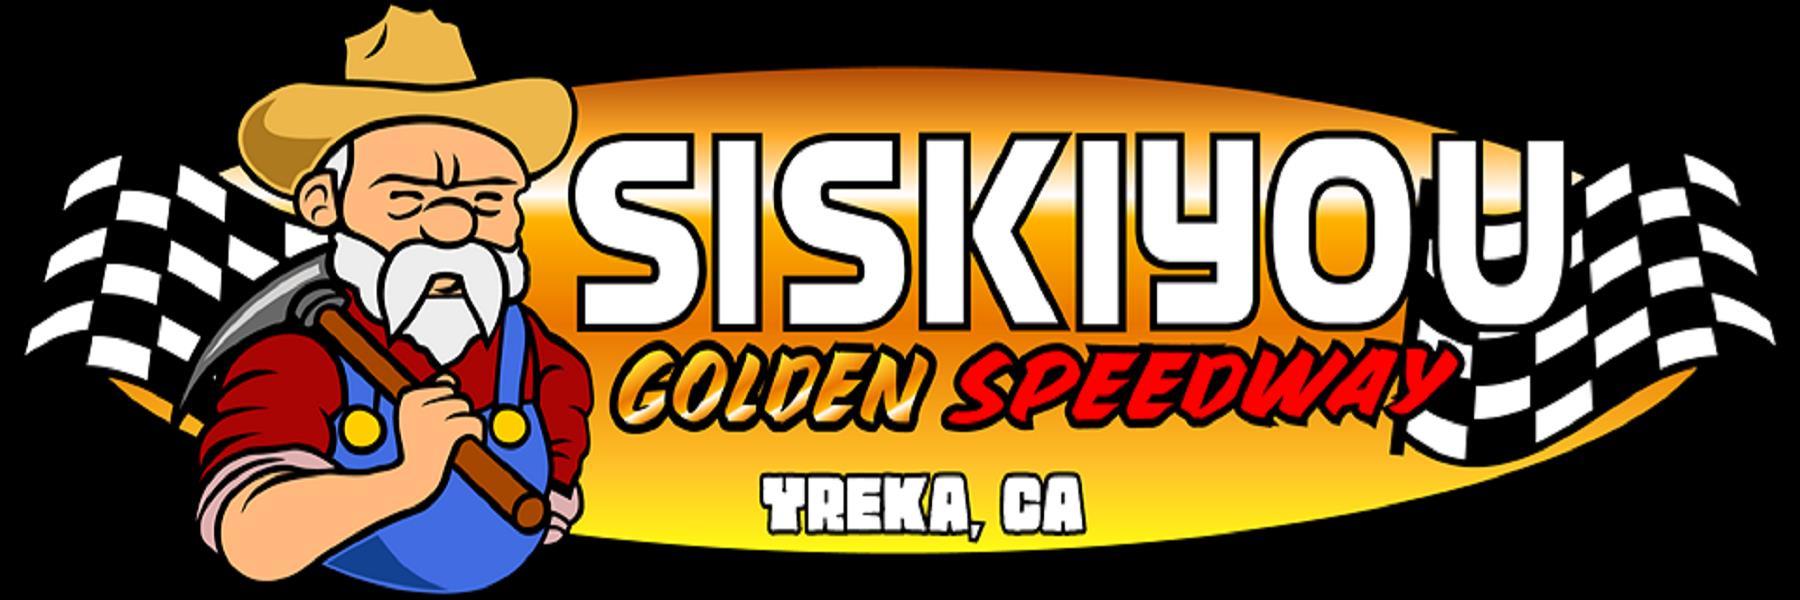 5/29/2021 - Siskiyou Golden Speedway